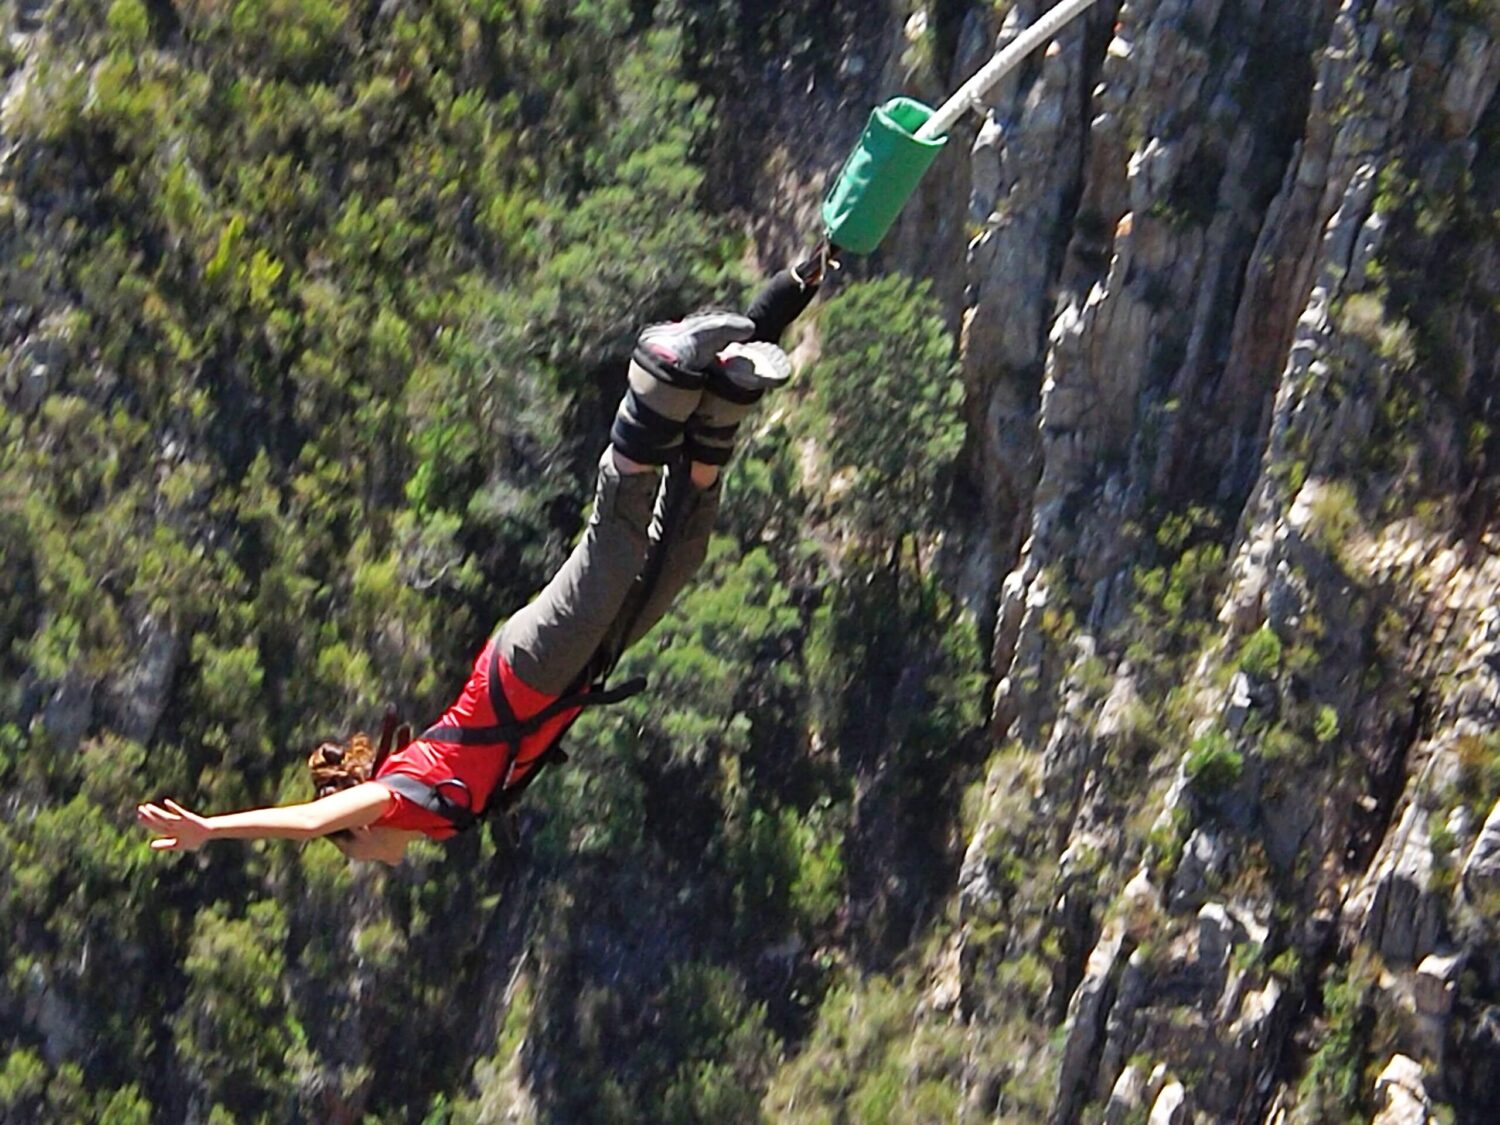 World's highest bridge bungee jump on the Bloukrans Bridge, South Africa